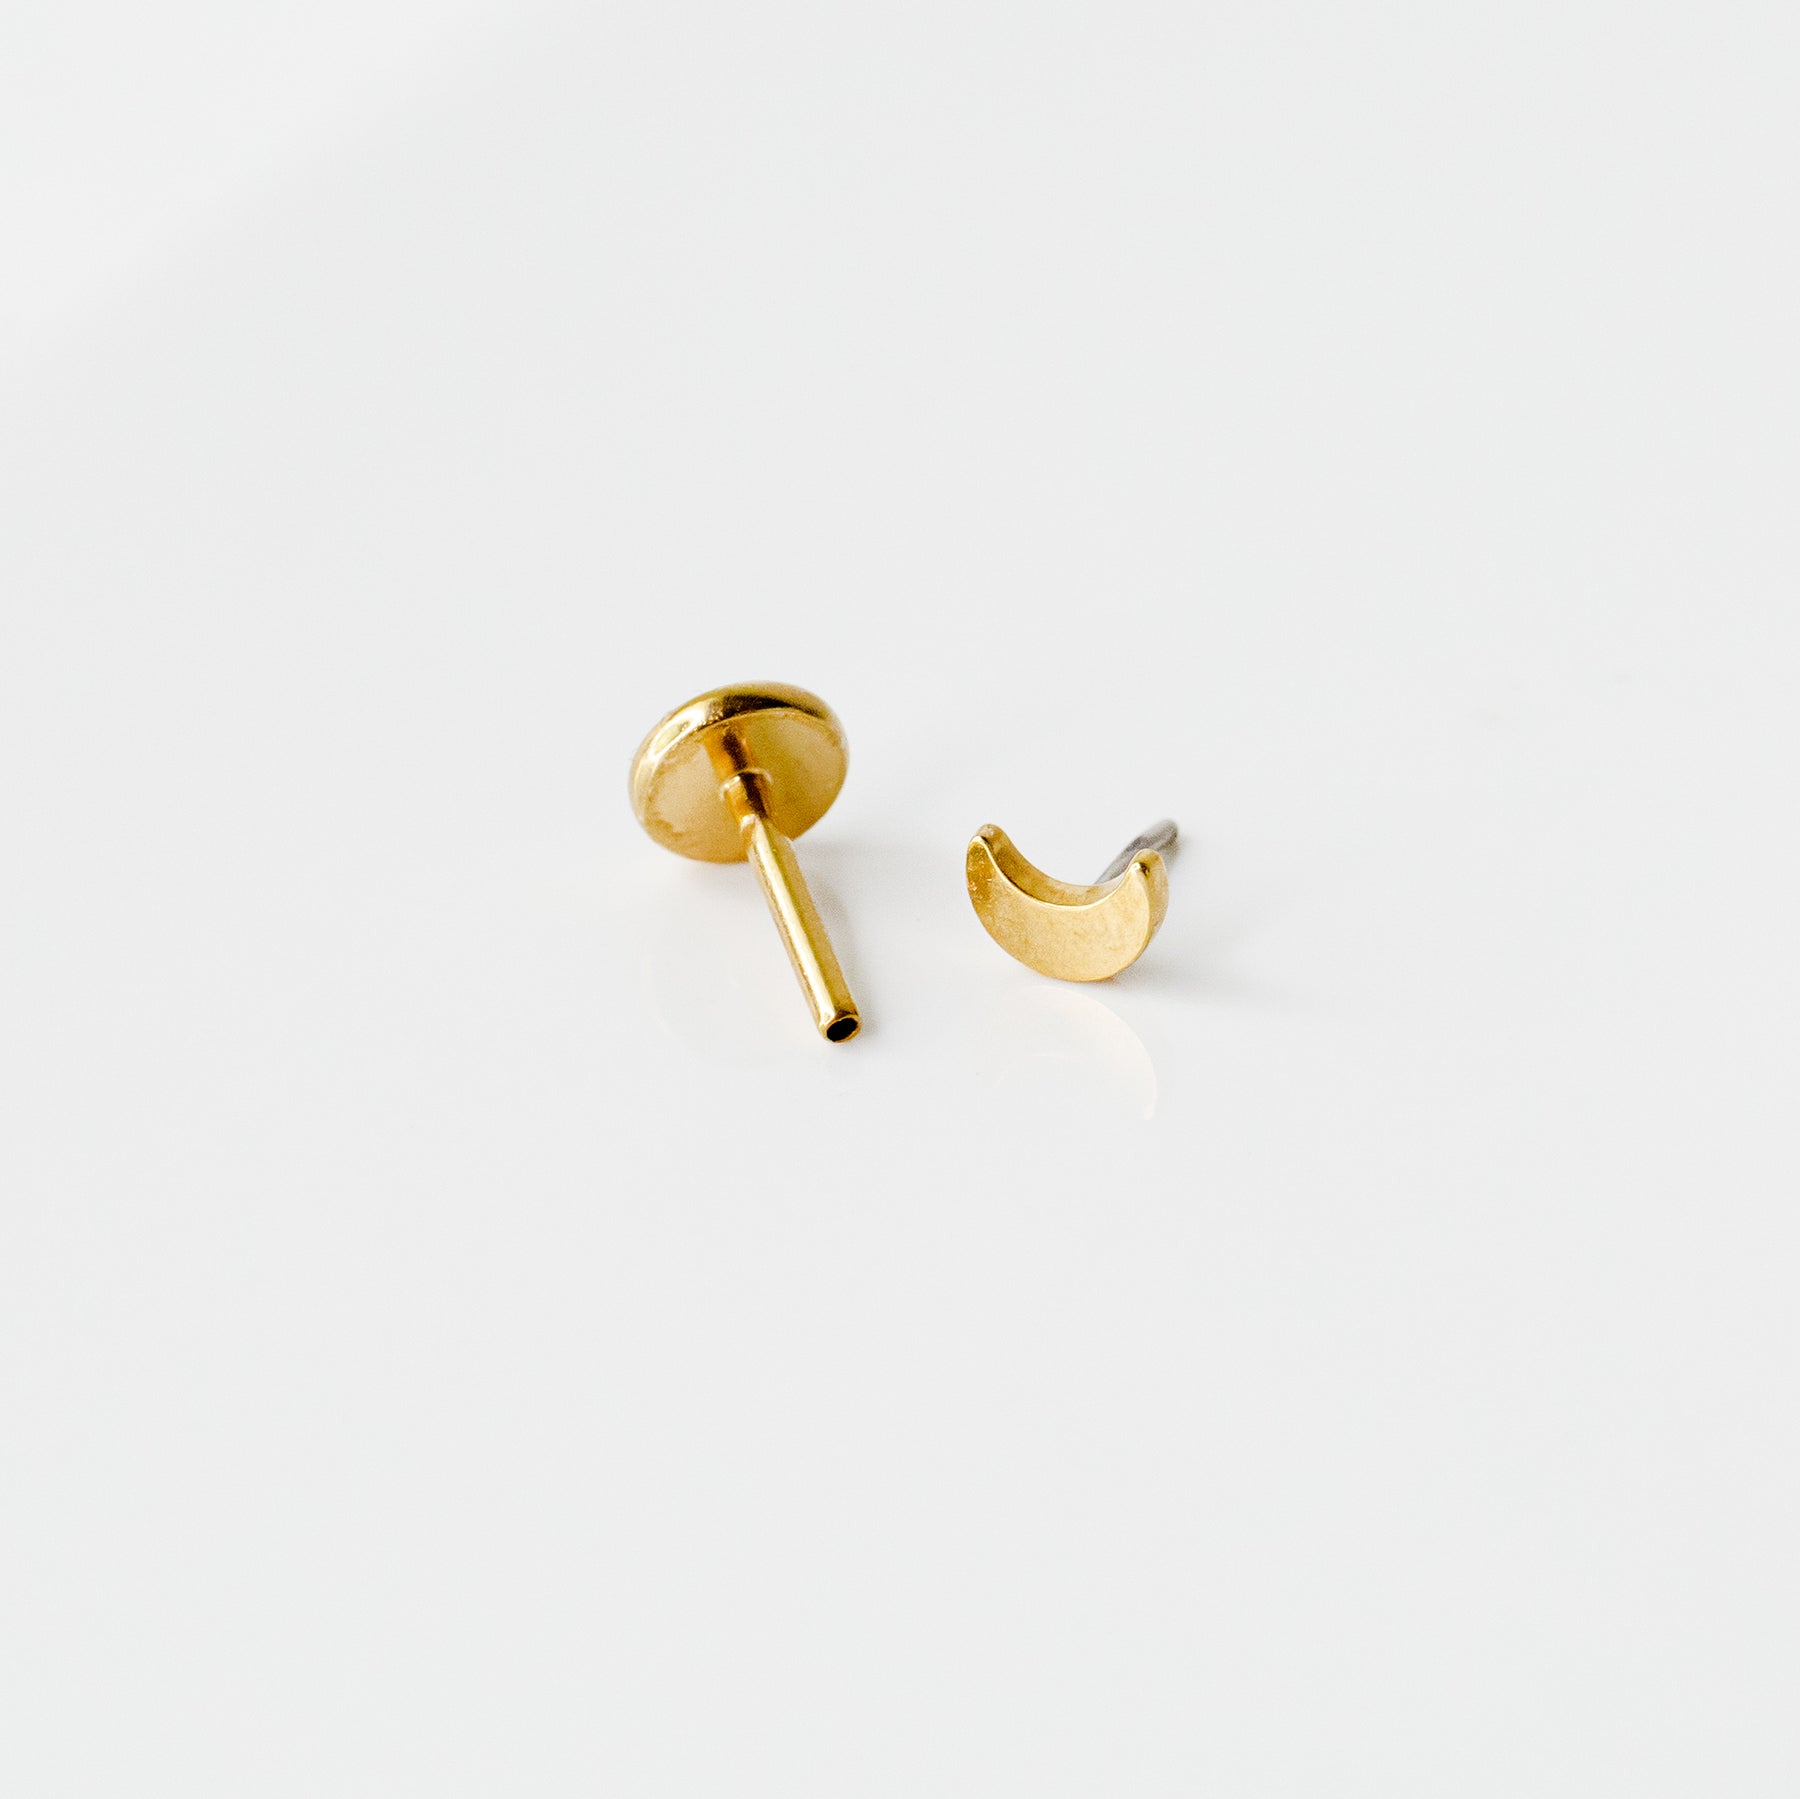 Heart Flat Back Sleeper Earrings - Grayling - Titanium - Hypoallergenic - 1/4 inch Length - 20ga - Waterproof Gold PVD Finish